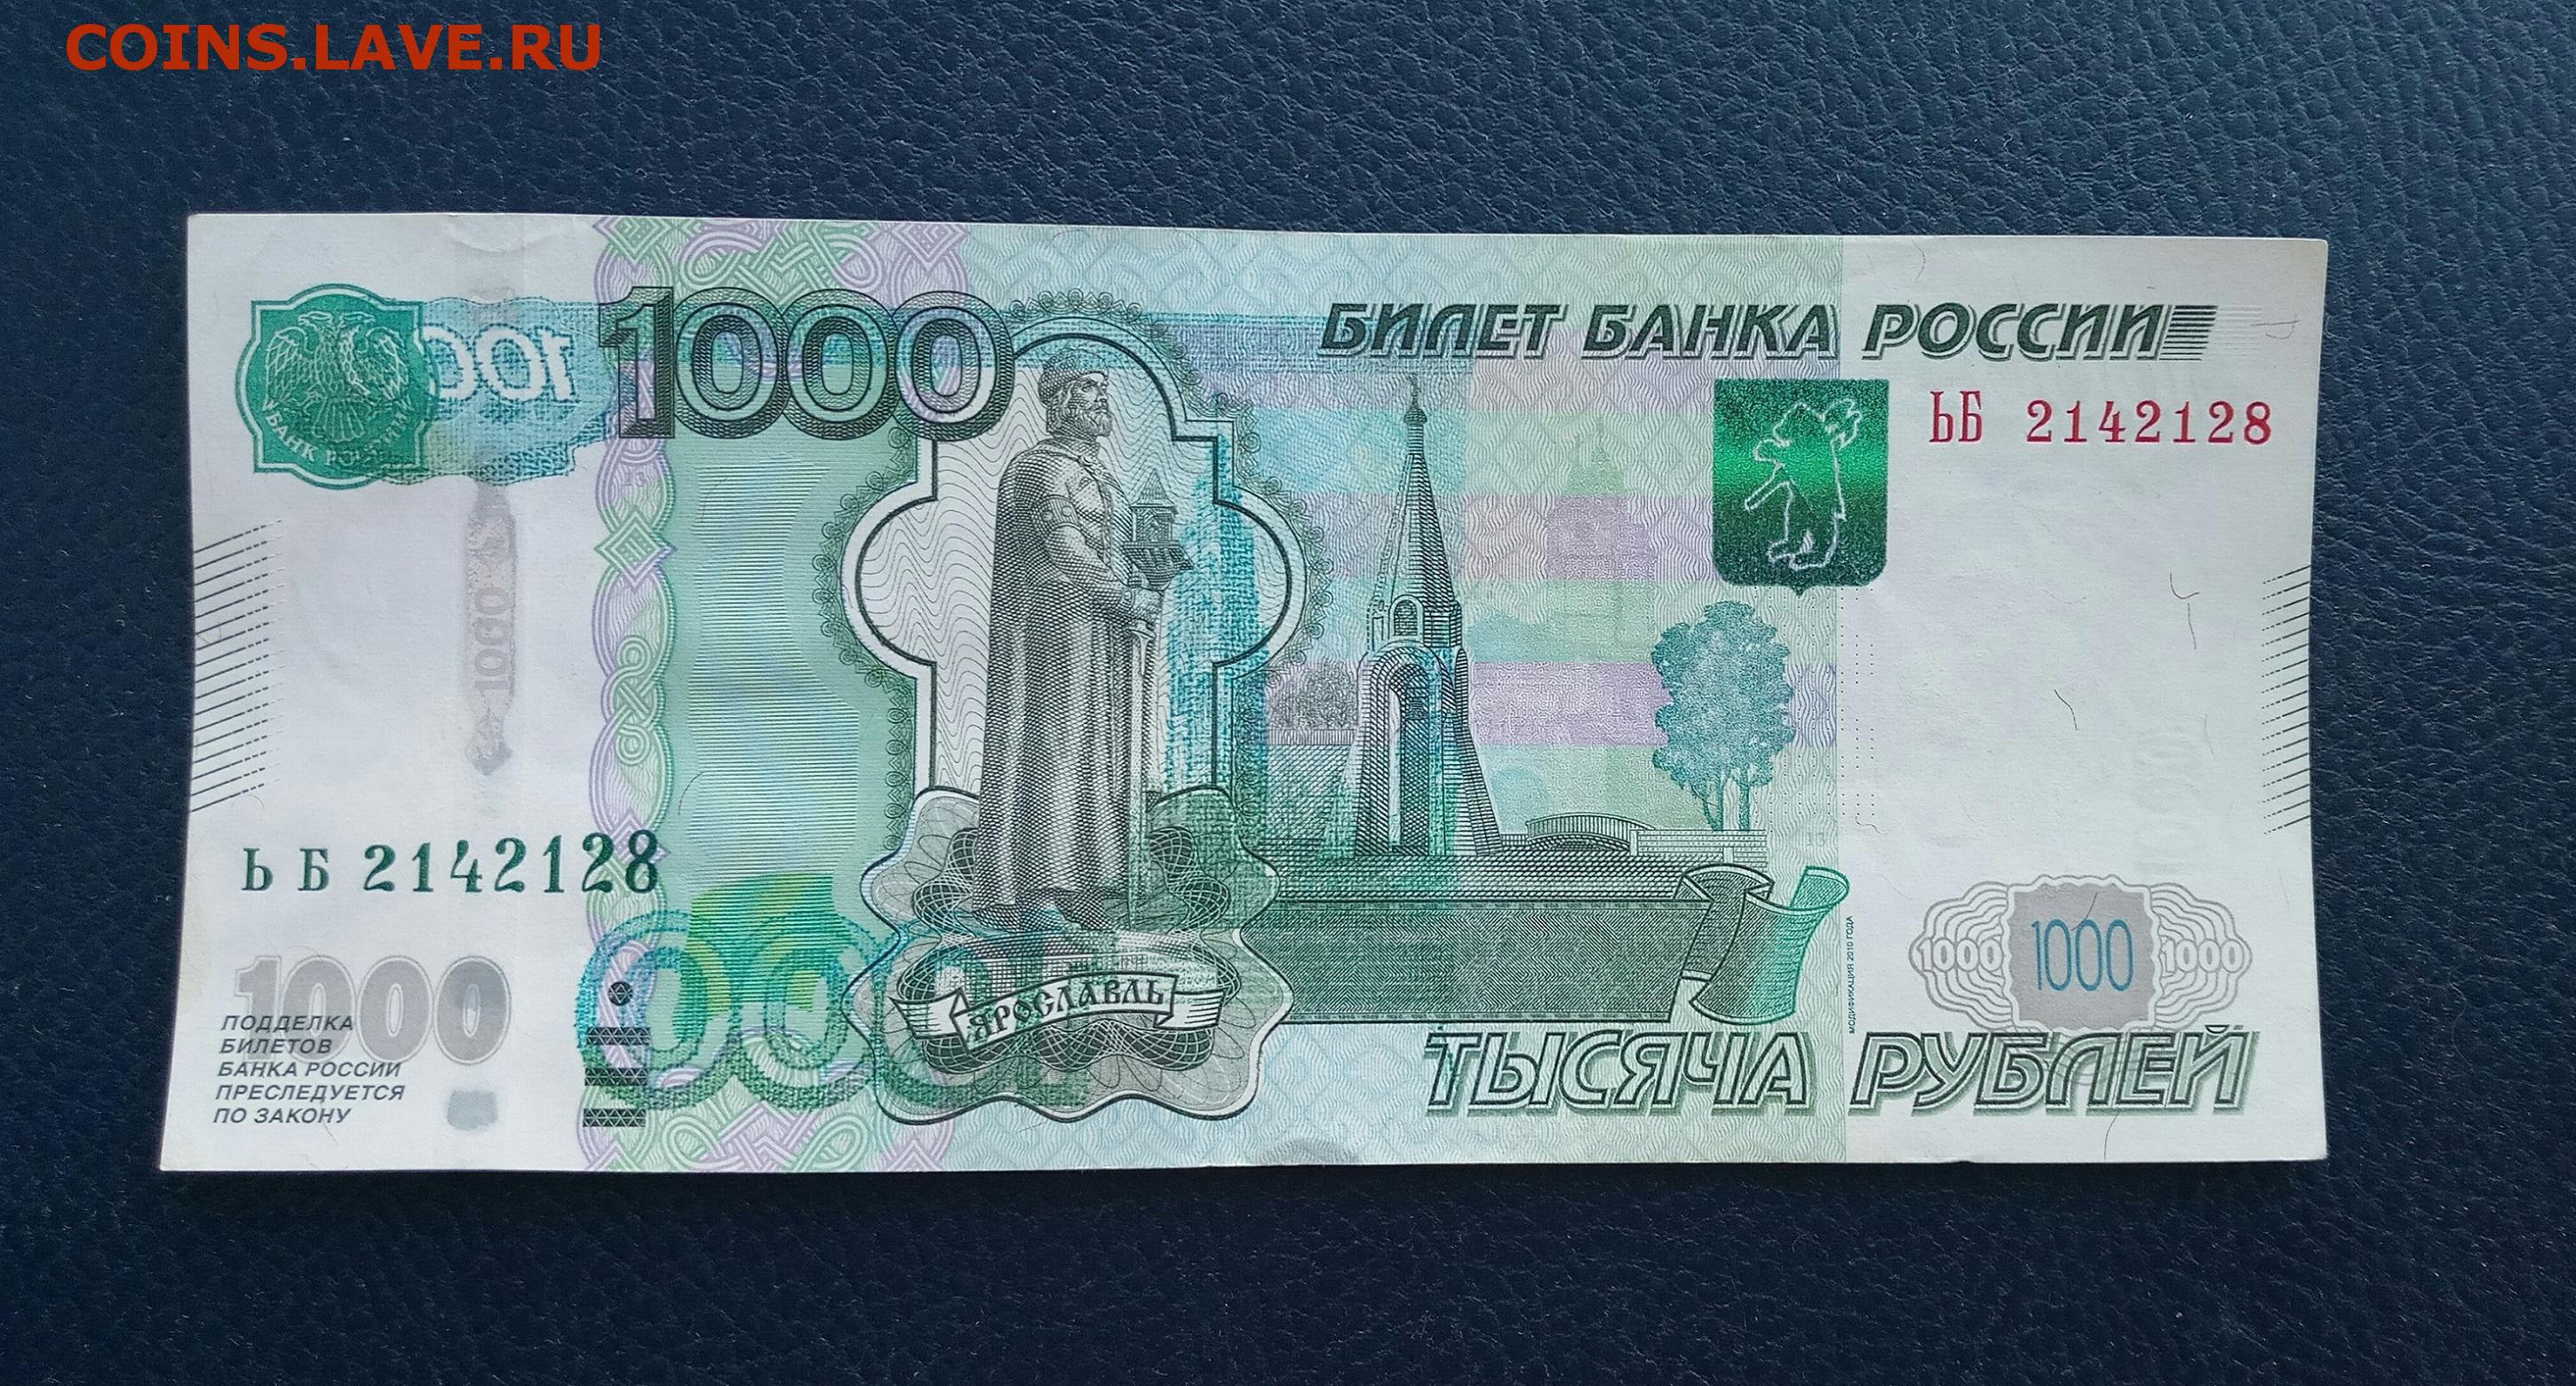 Тысяча рублей размер. Купюра 1000 рублей. Тысяча рублей для печати. 1000 Рублей купюра для печати. 1000 Рублей печать.